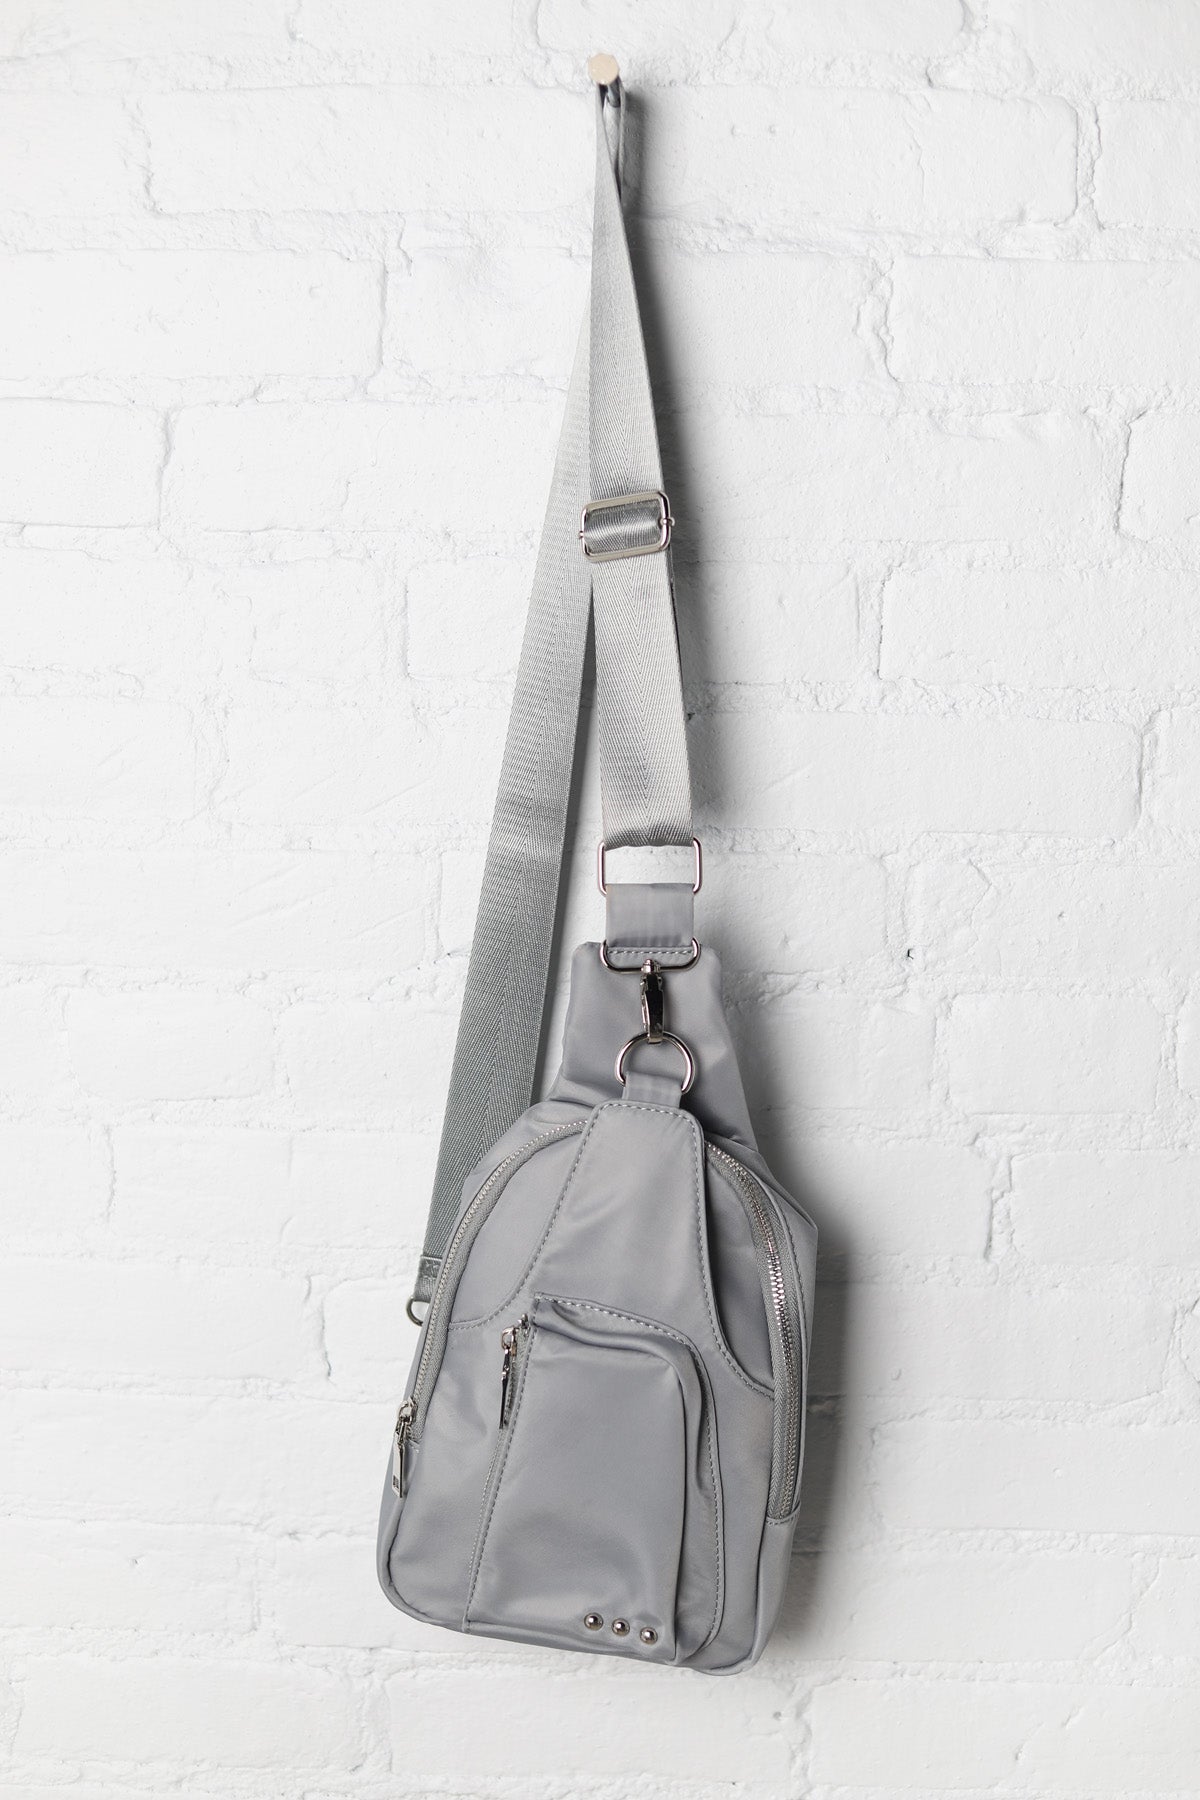 Savannah Gray Sling Bag